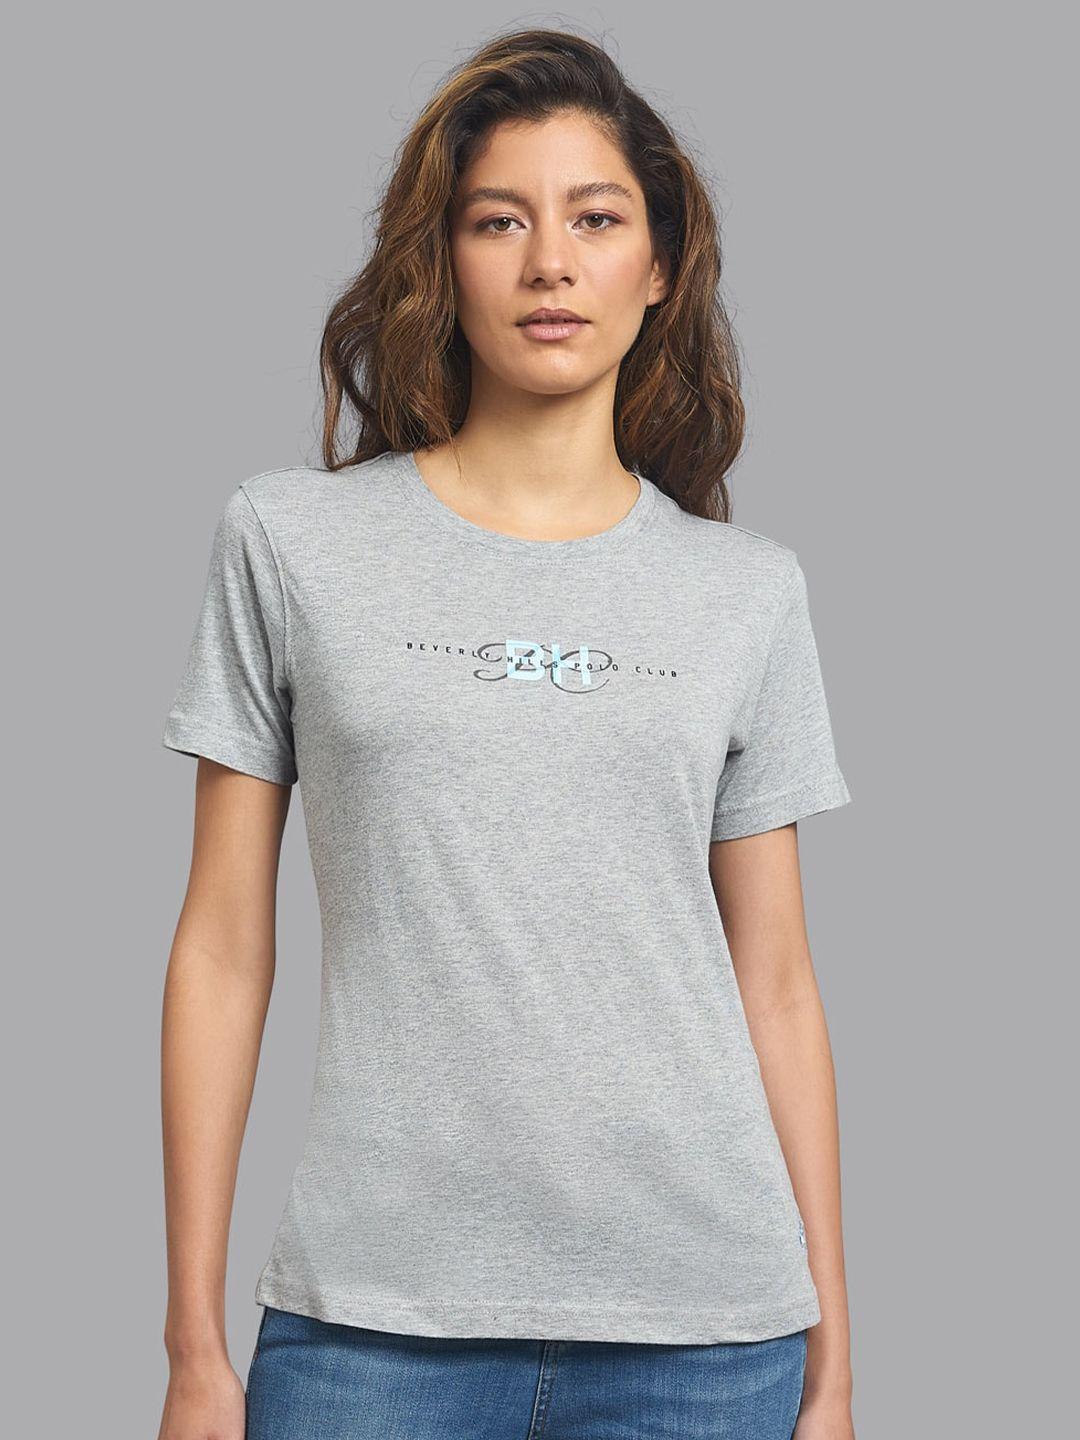 beverly-hills-polo-club-women-grey-melange-brand-logo-printed-t-shirt